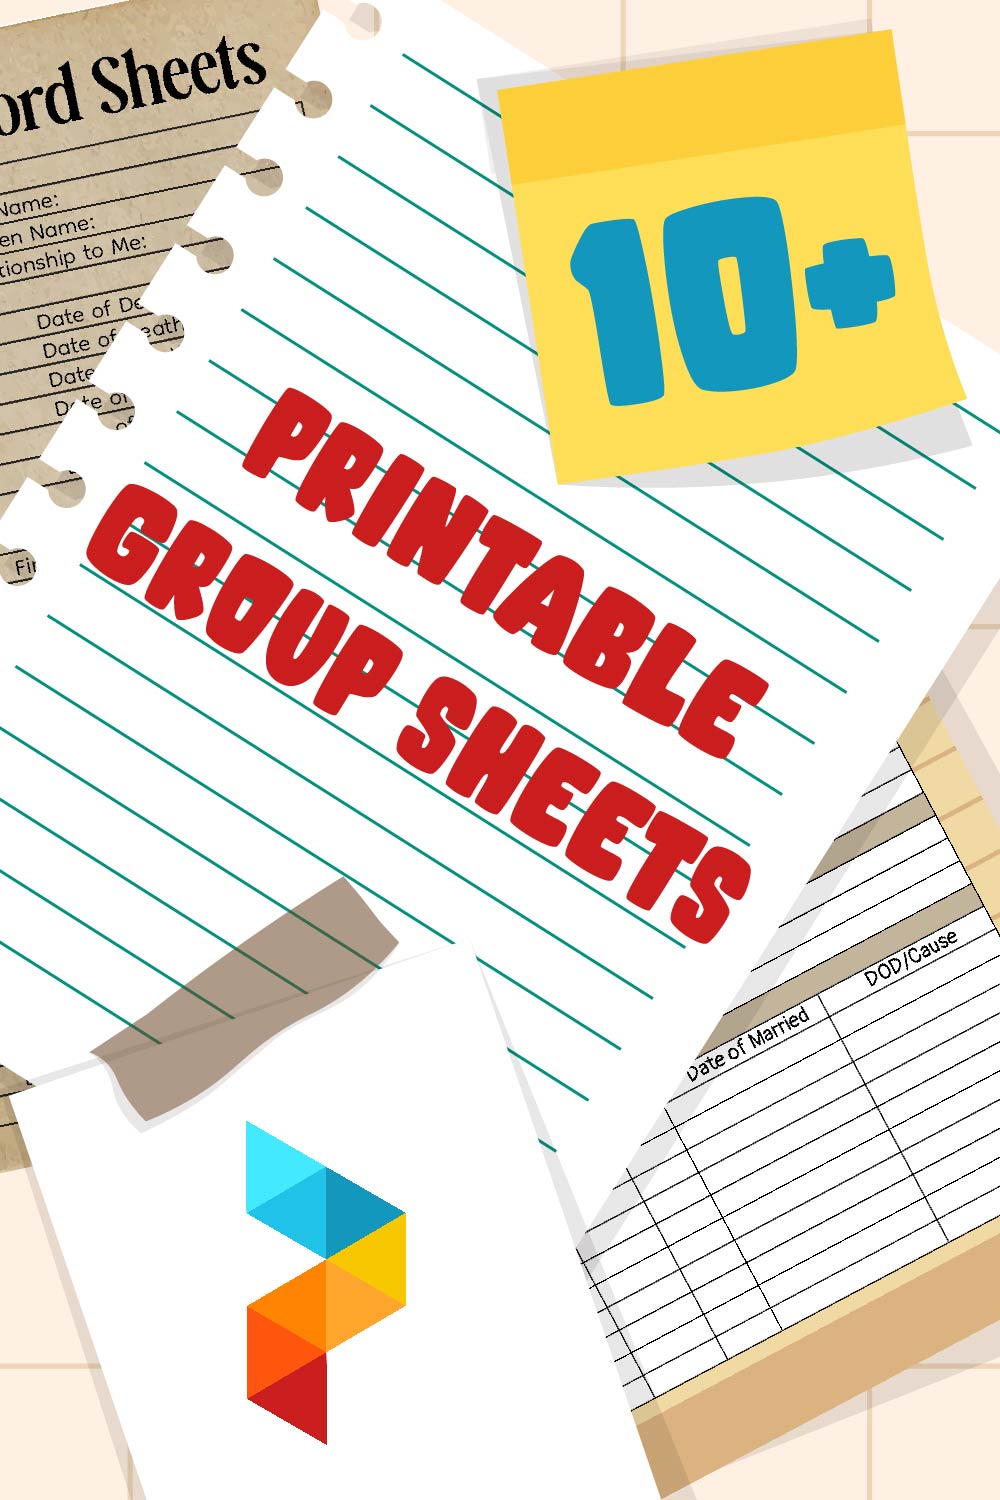 Group Sheets